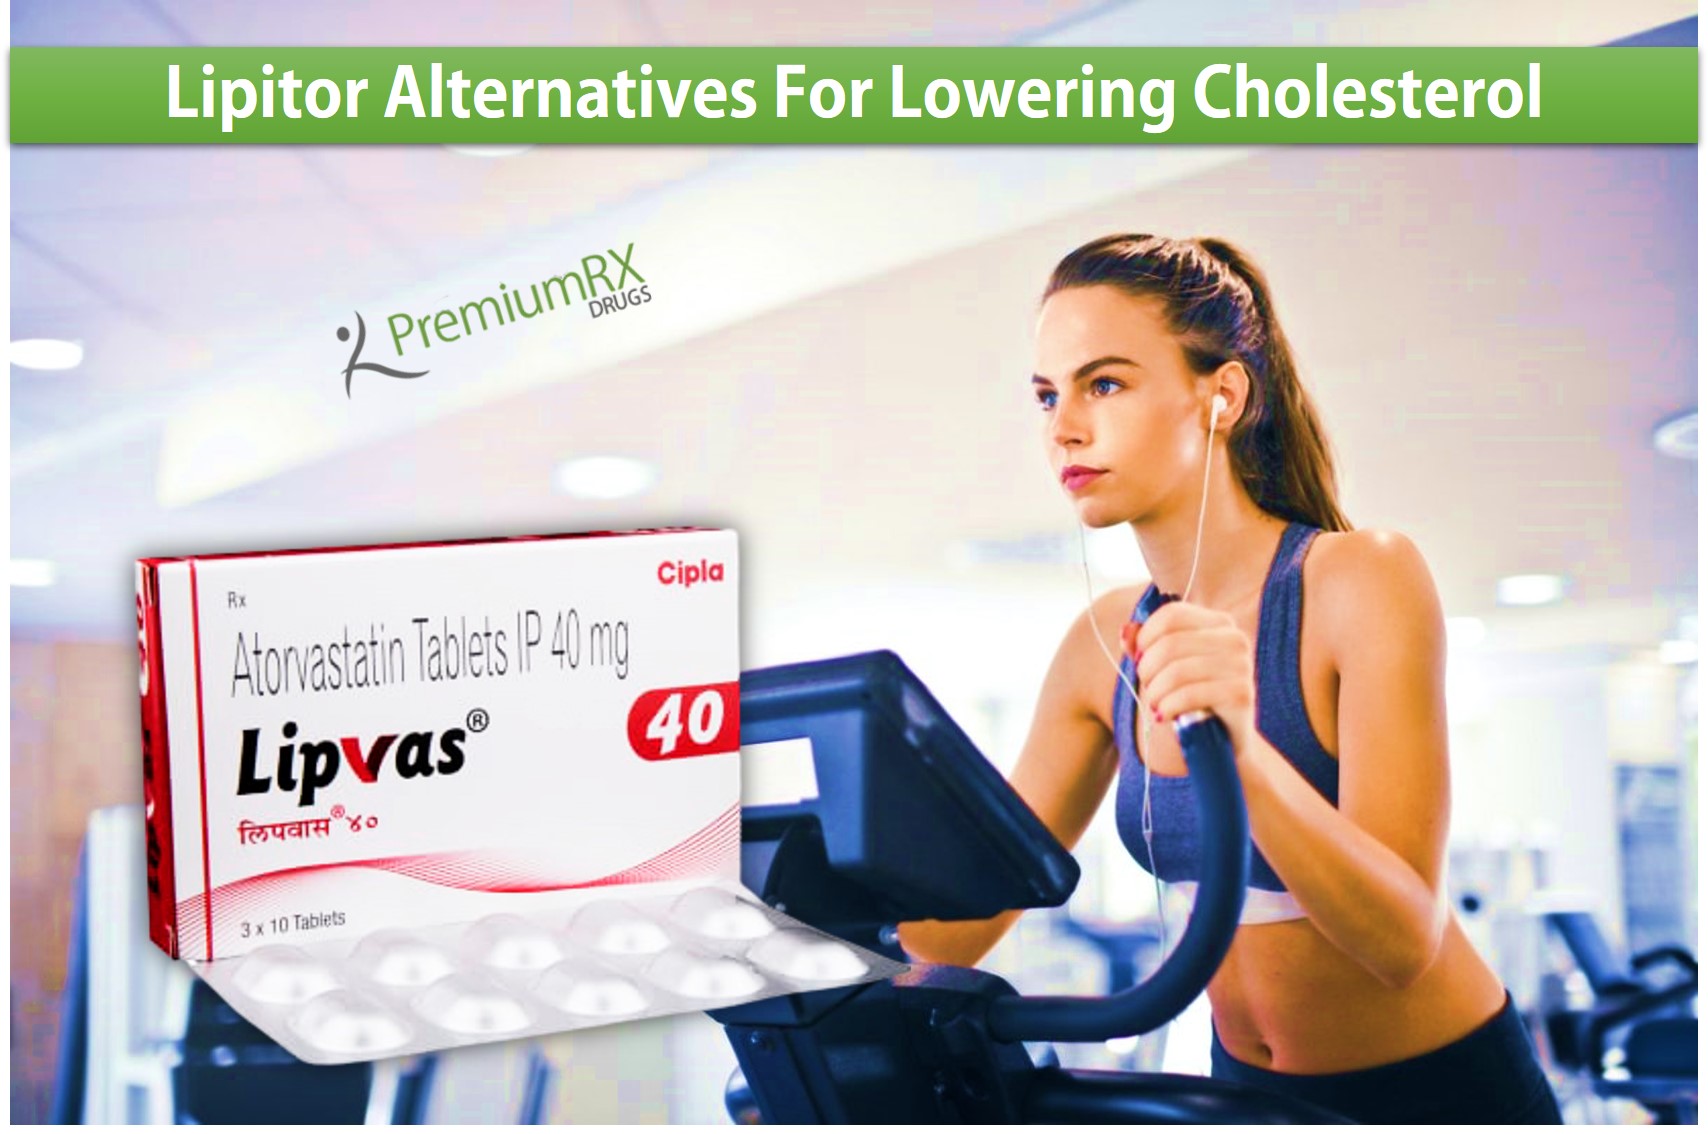 Lipitor Alternatives For Lowering Cholesterol